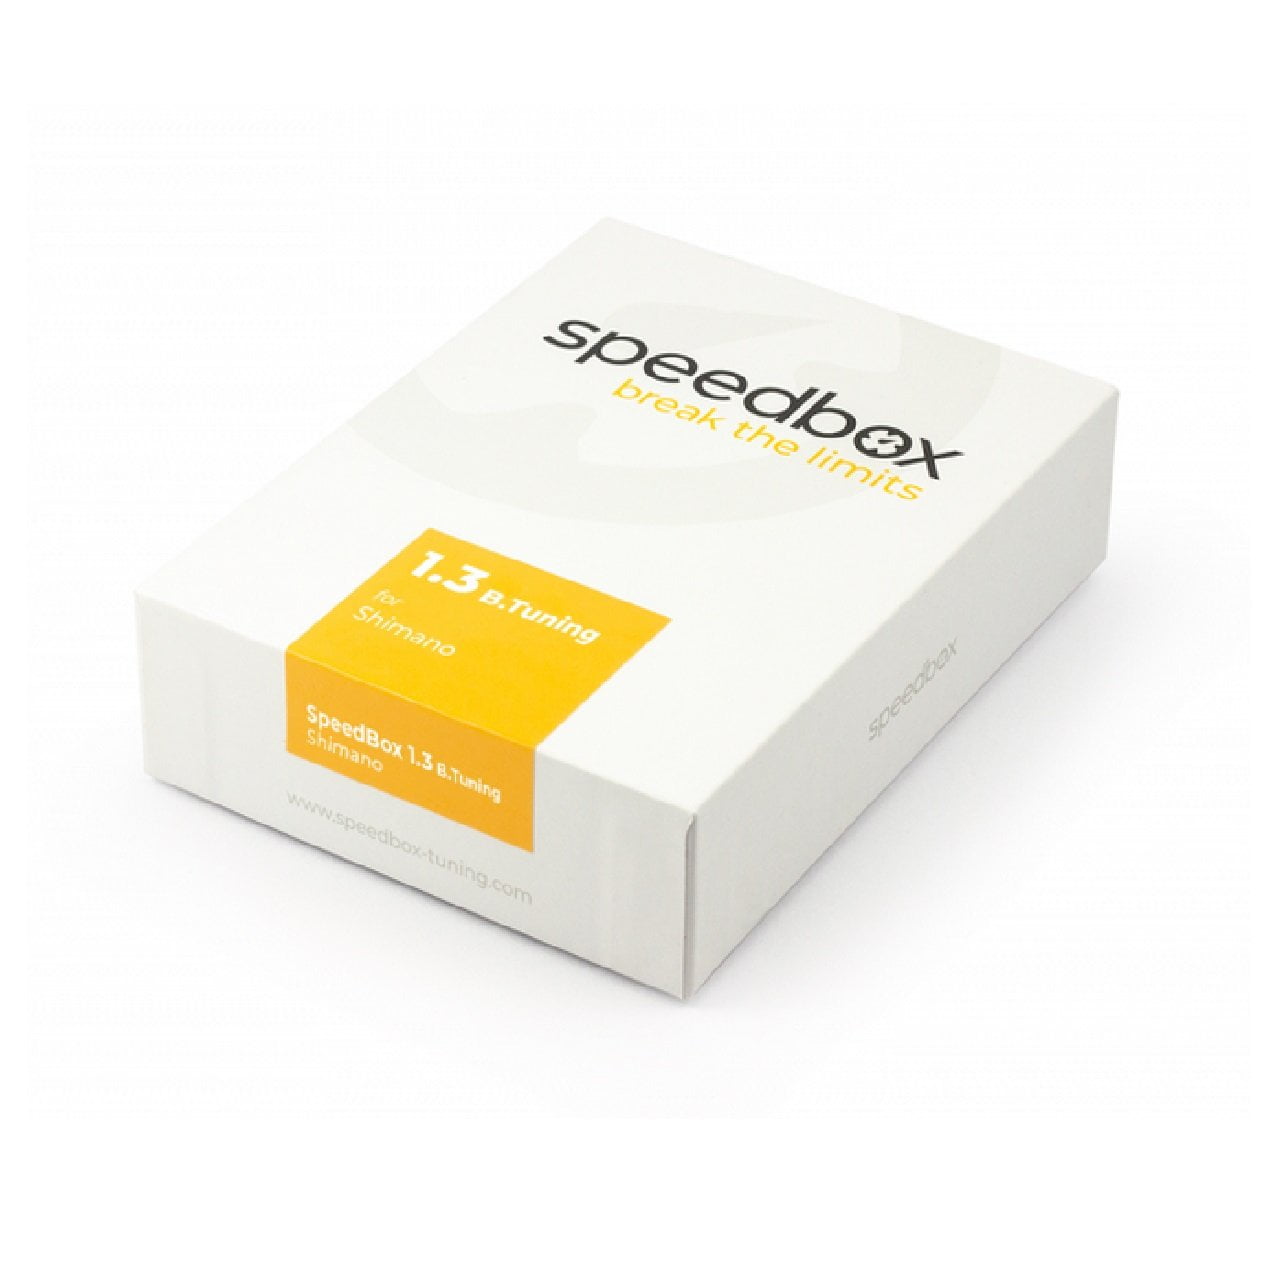 SpeedBox 1.3 Speed Tuning fits Shimano EP8 w/E-Tube 